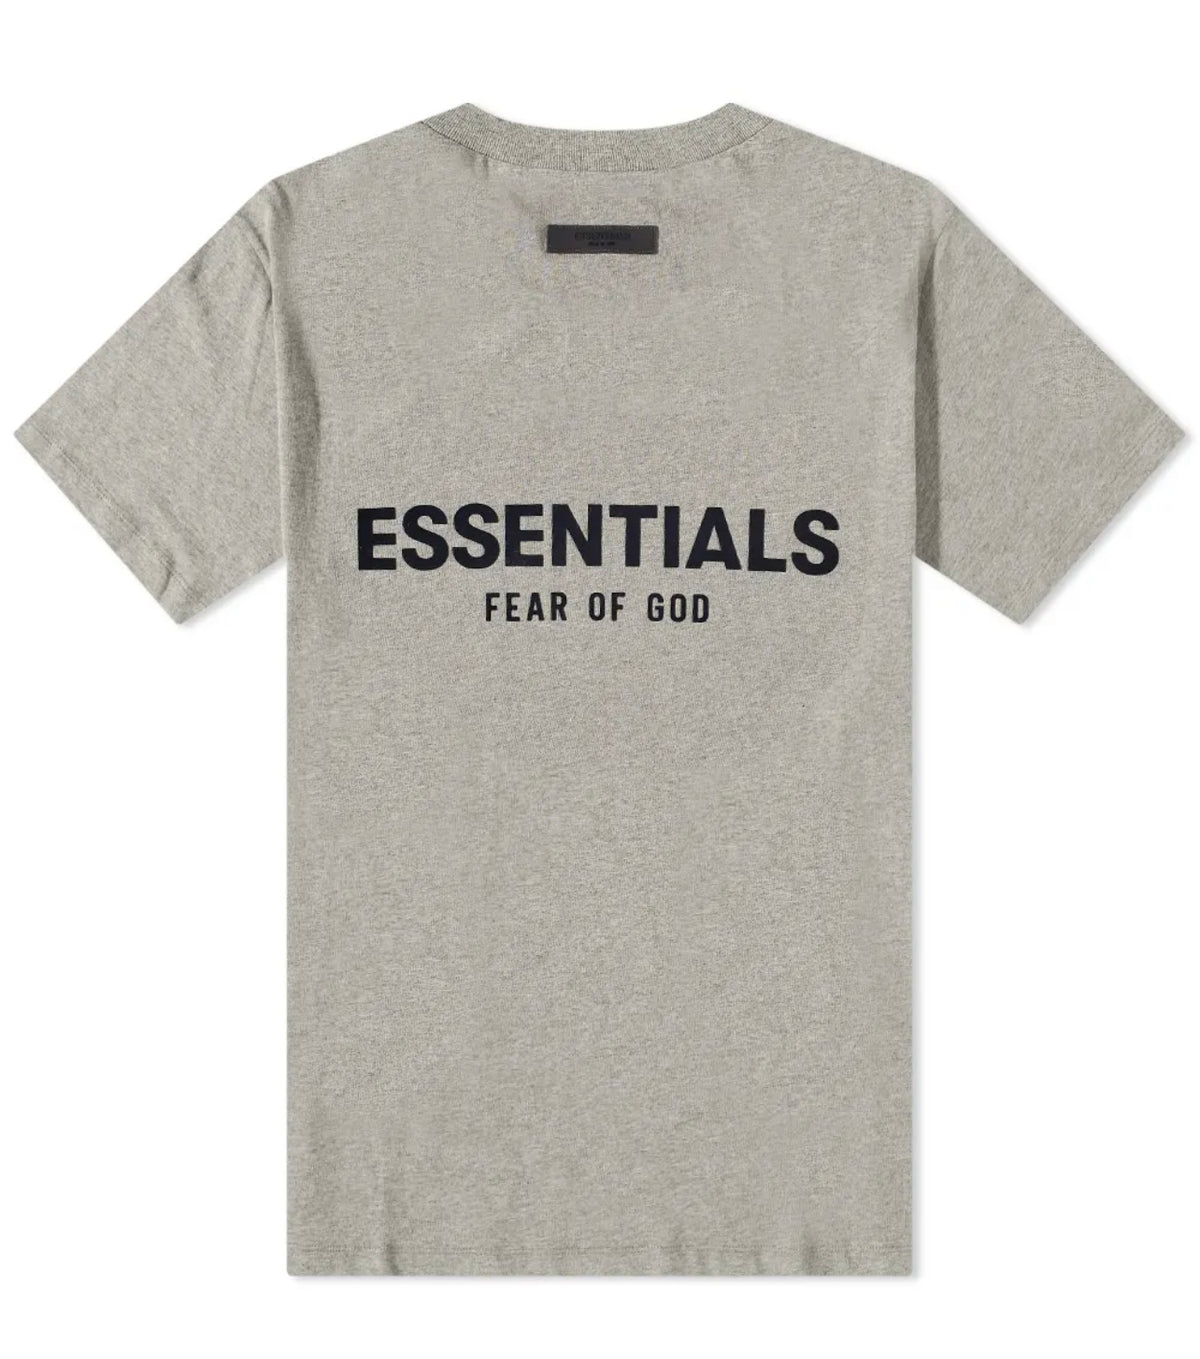 Fear Of God “Essentials” SS22 Dark Oatmeal Logo Tee